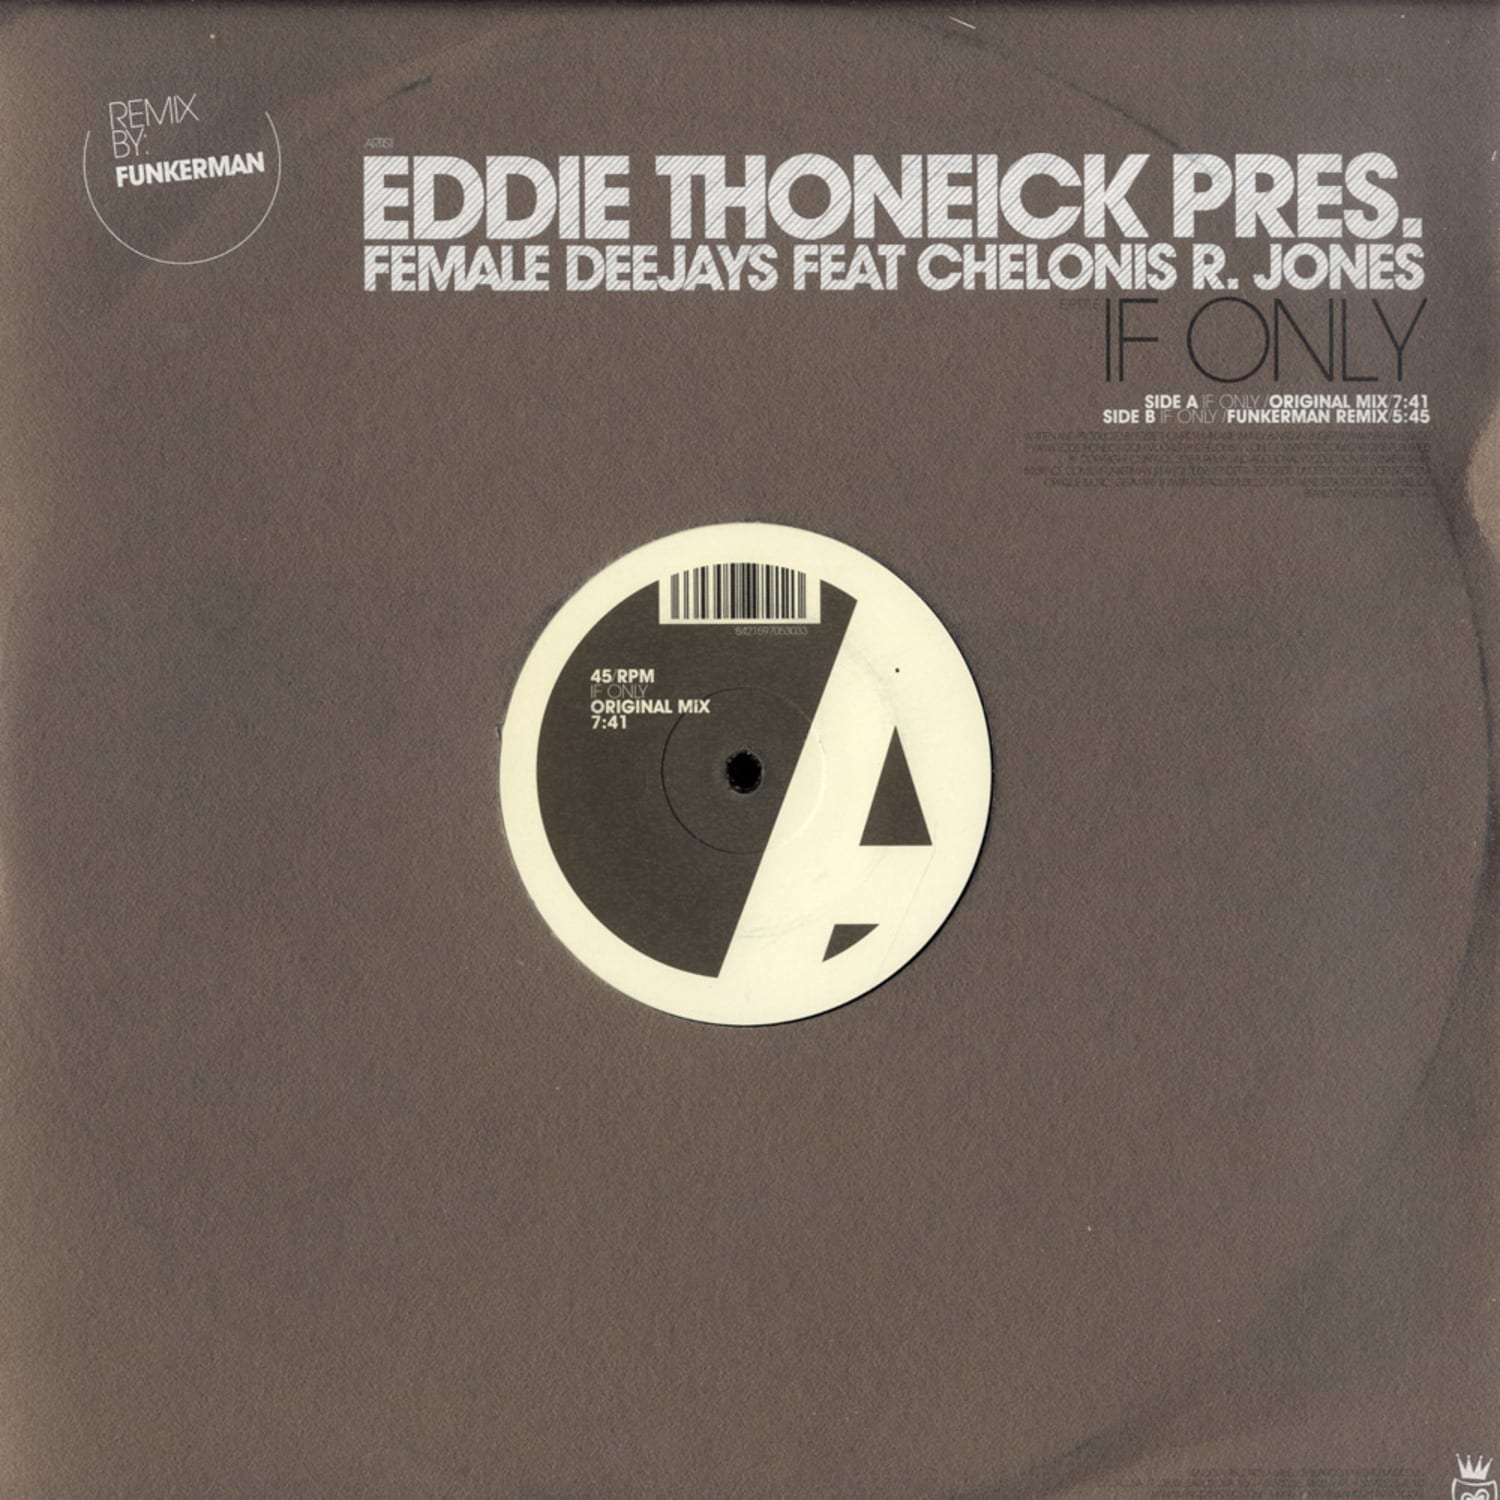 Eddie Thoneick Pres. Female Deejays feat Chelonis R.Jones - IF ONLY